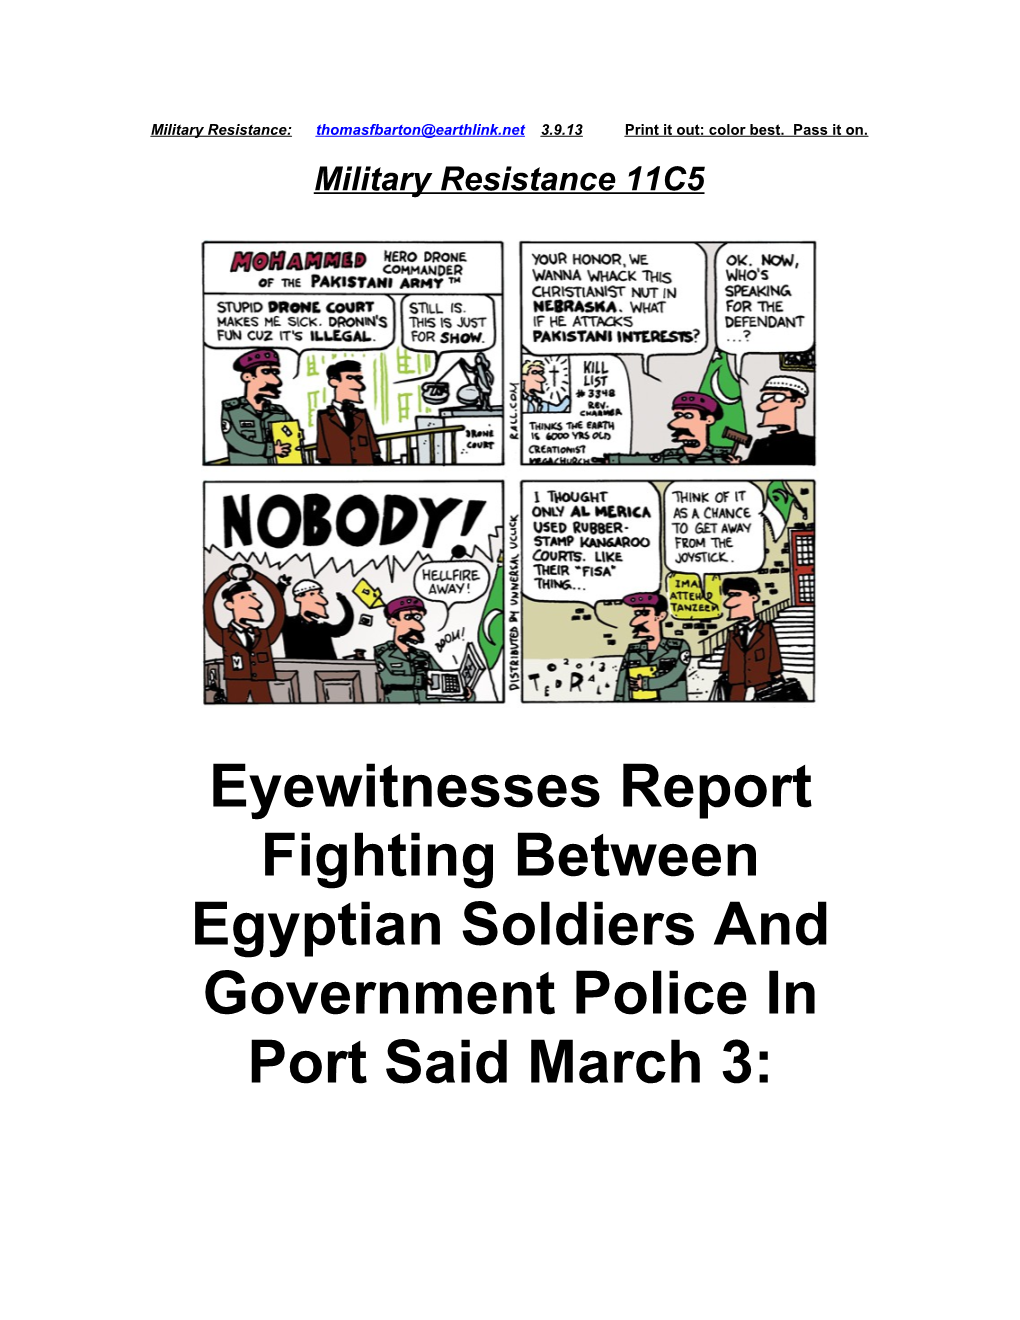 Military Resistance 11C5